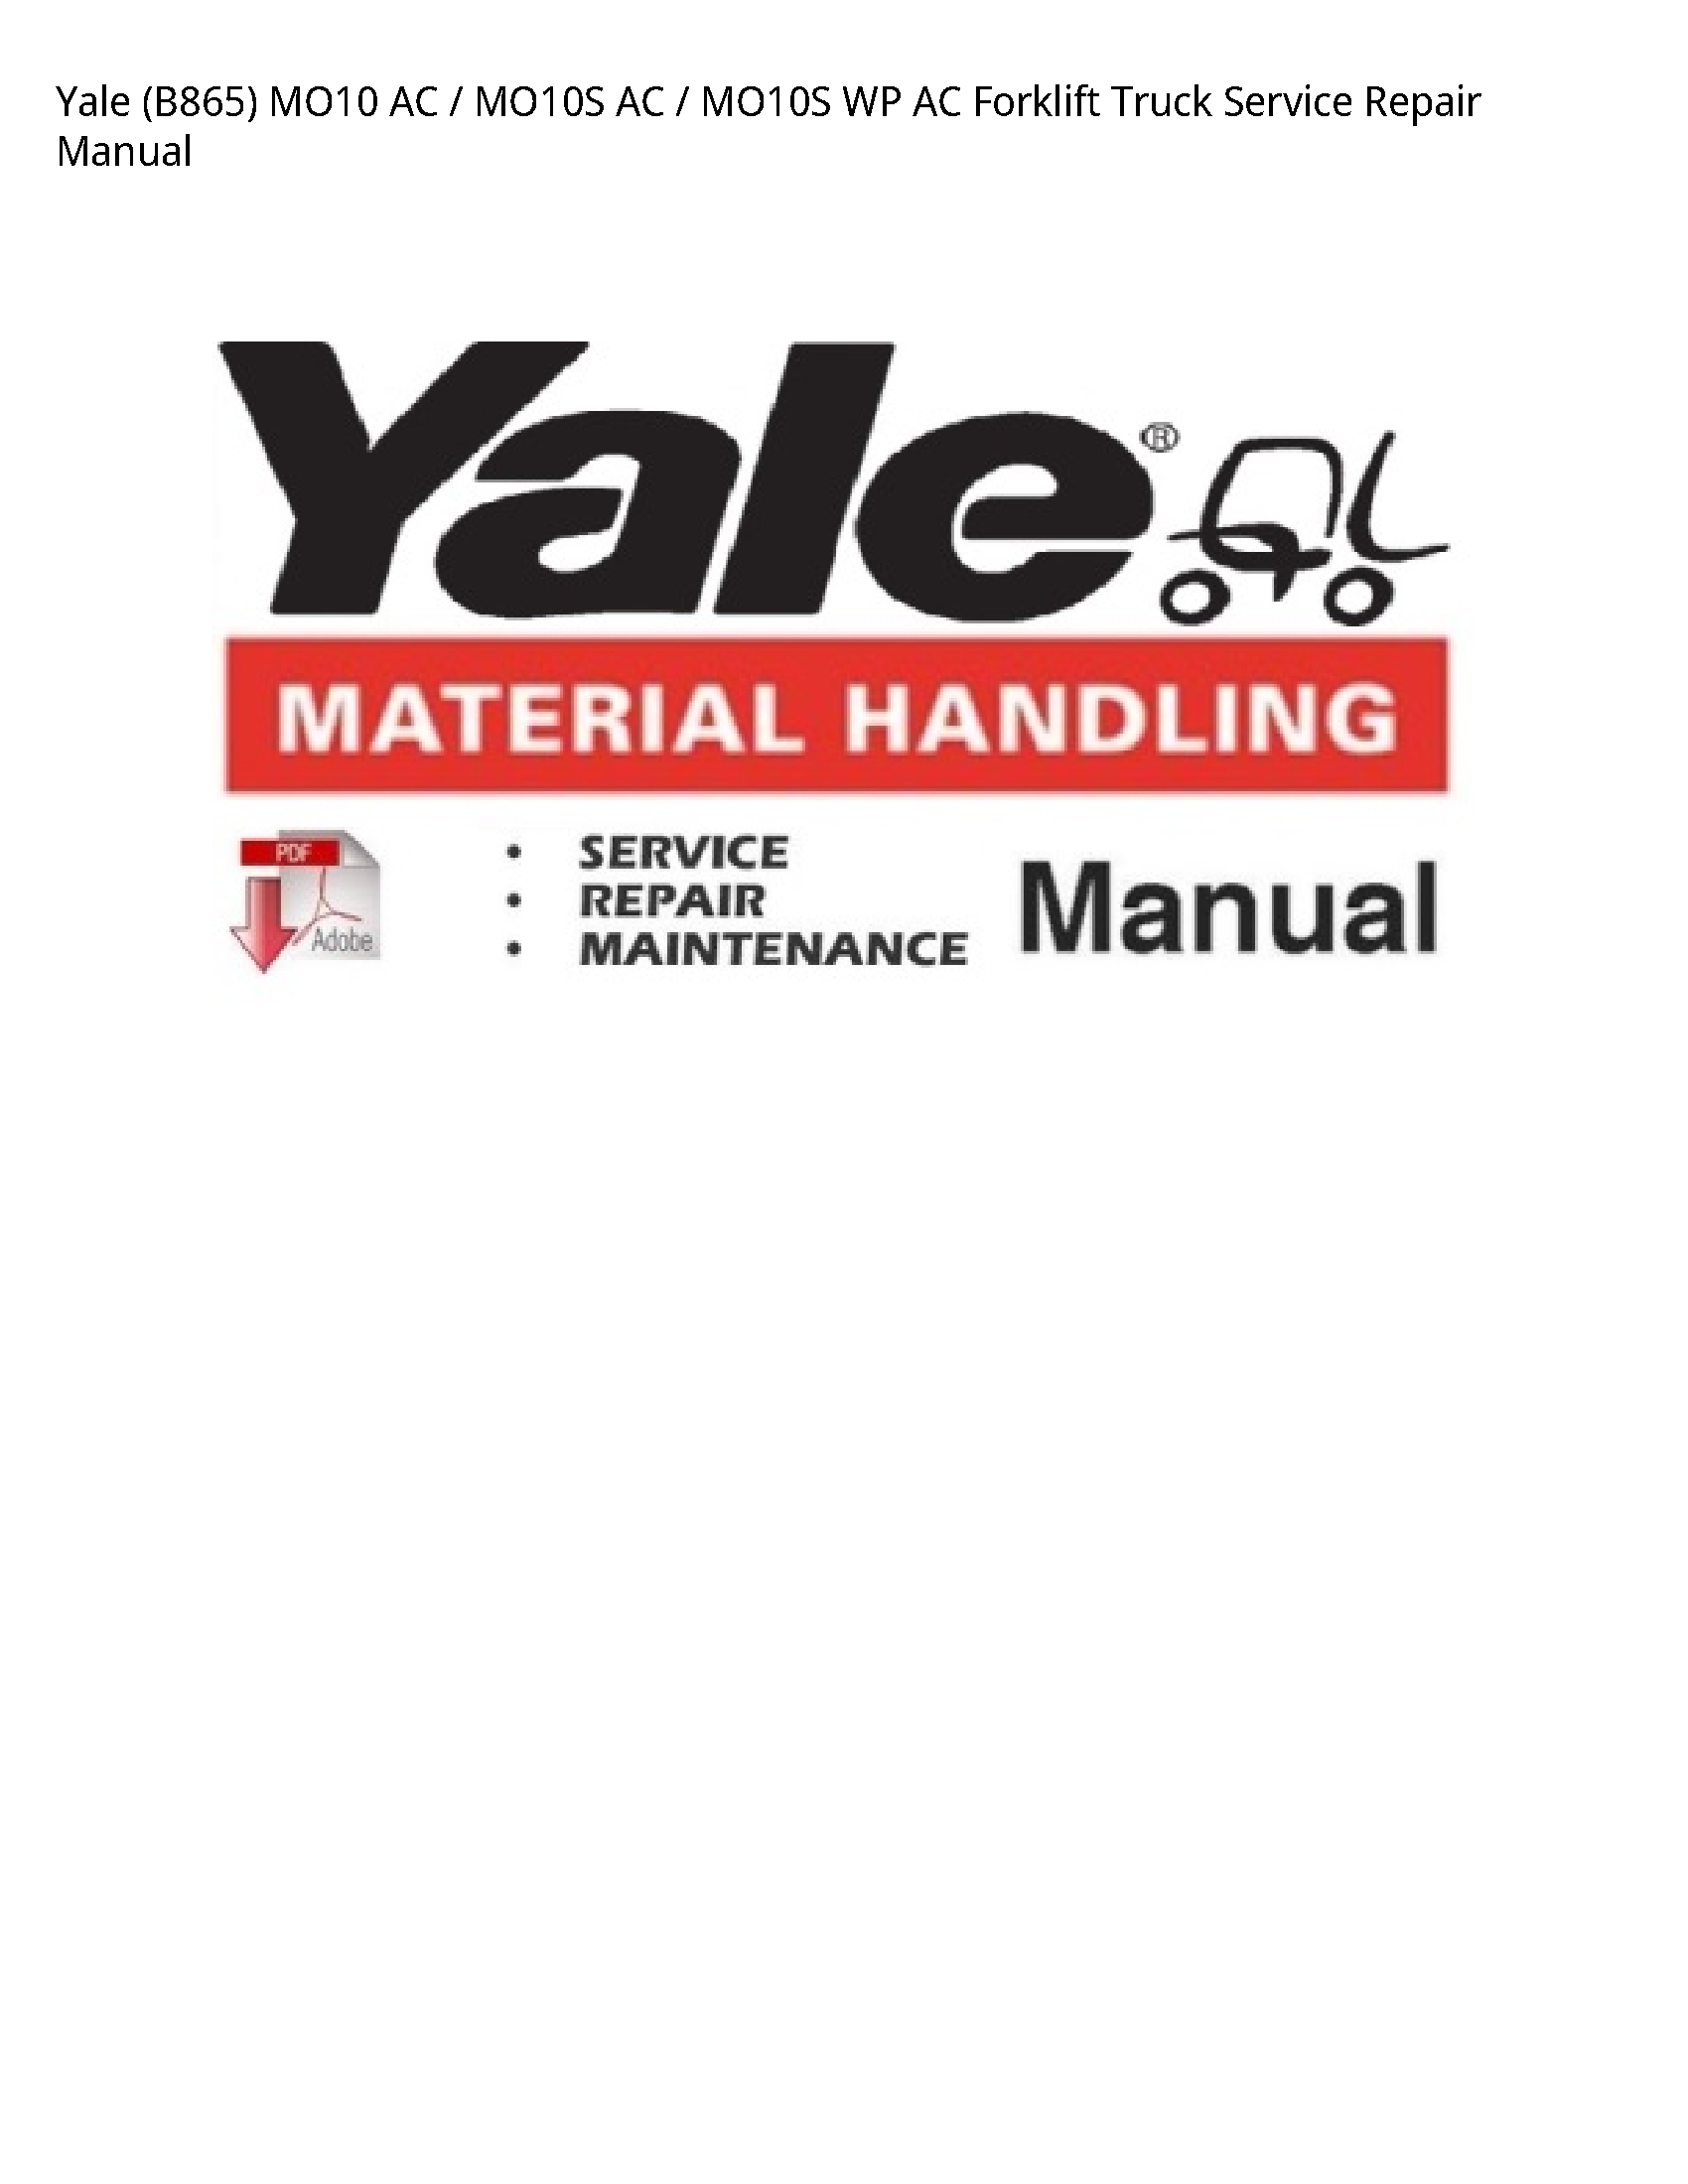 Yale (B865) AC AC WP AC Forklift Truck manual